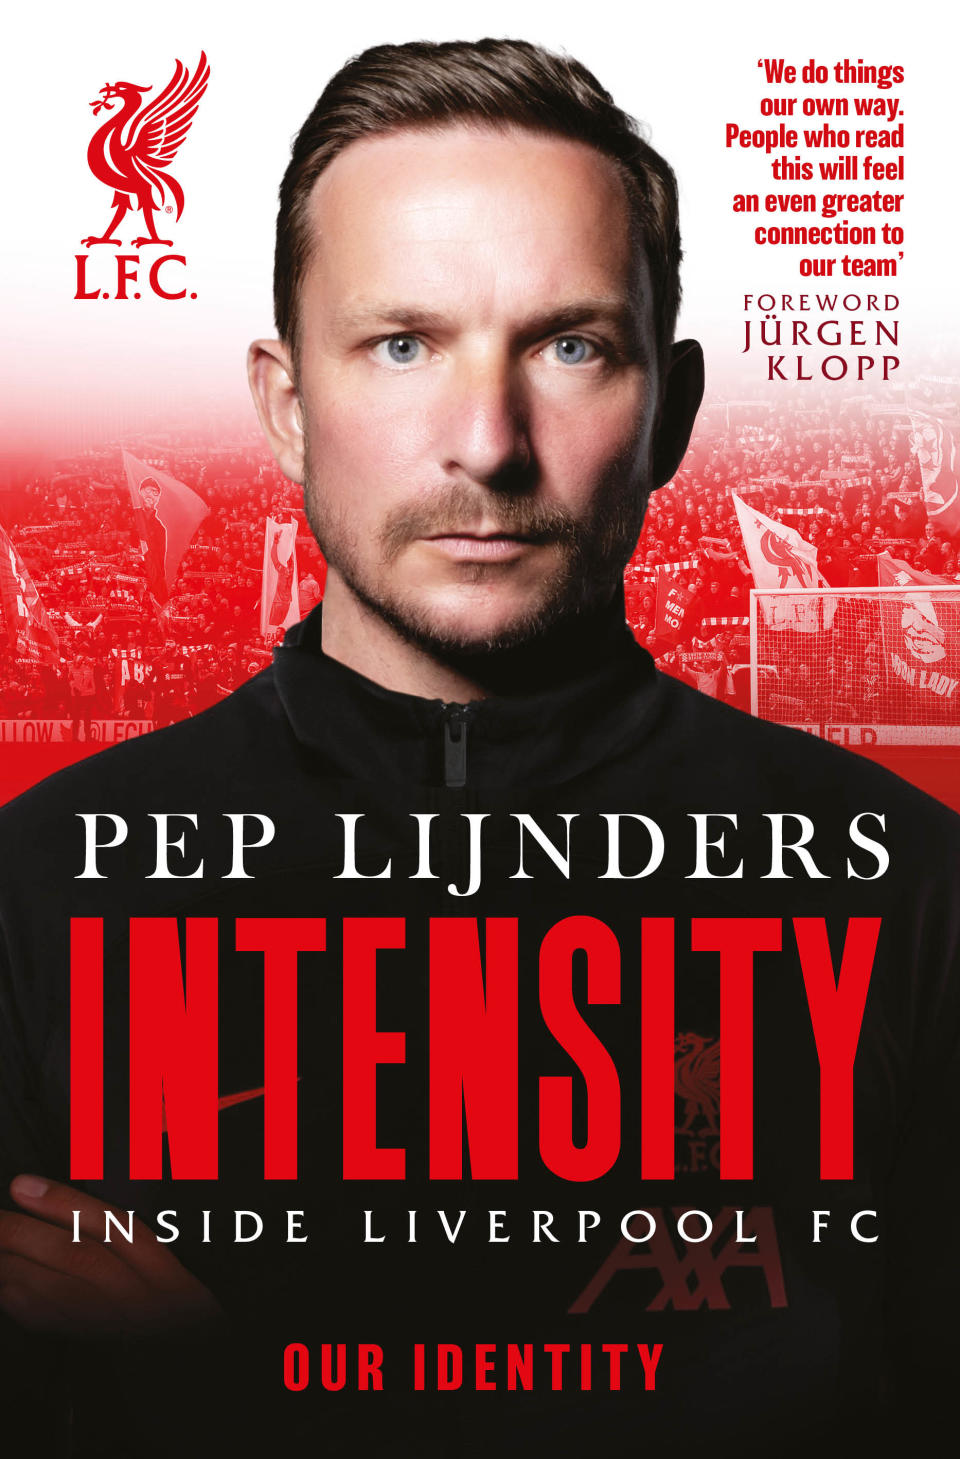 Liverpool assistant Pep Lijnders has released a book (LFC flyer)